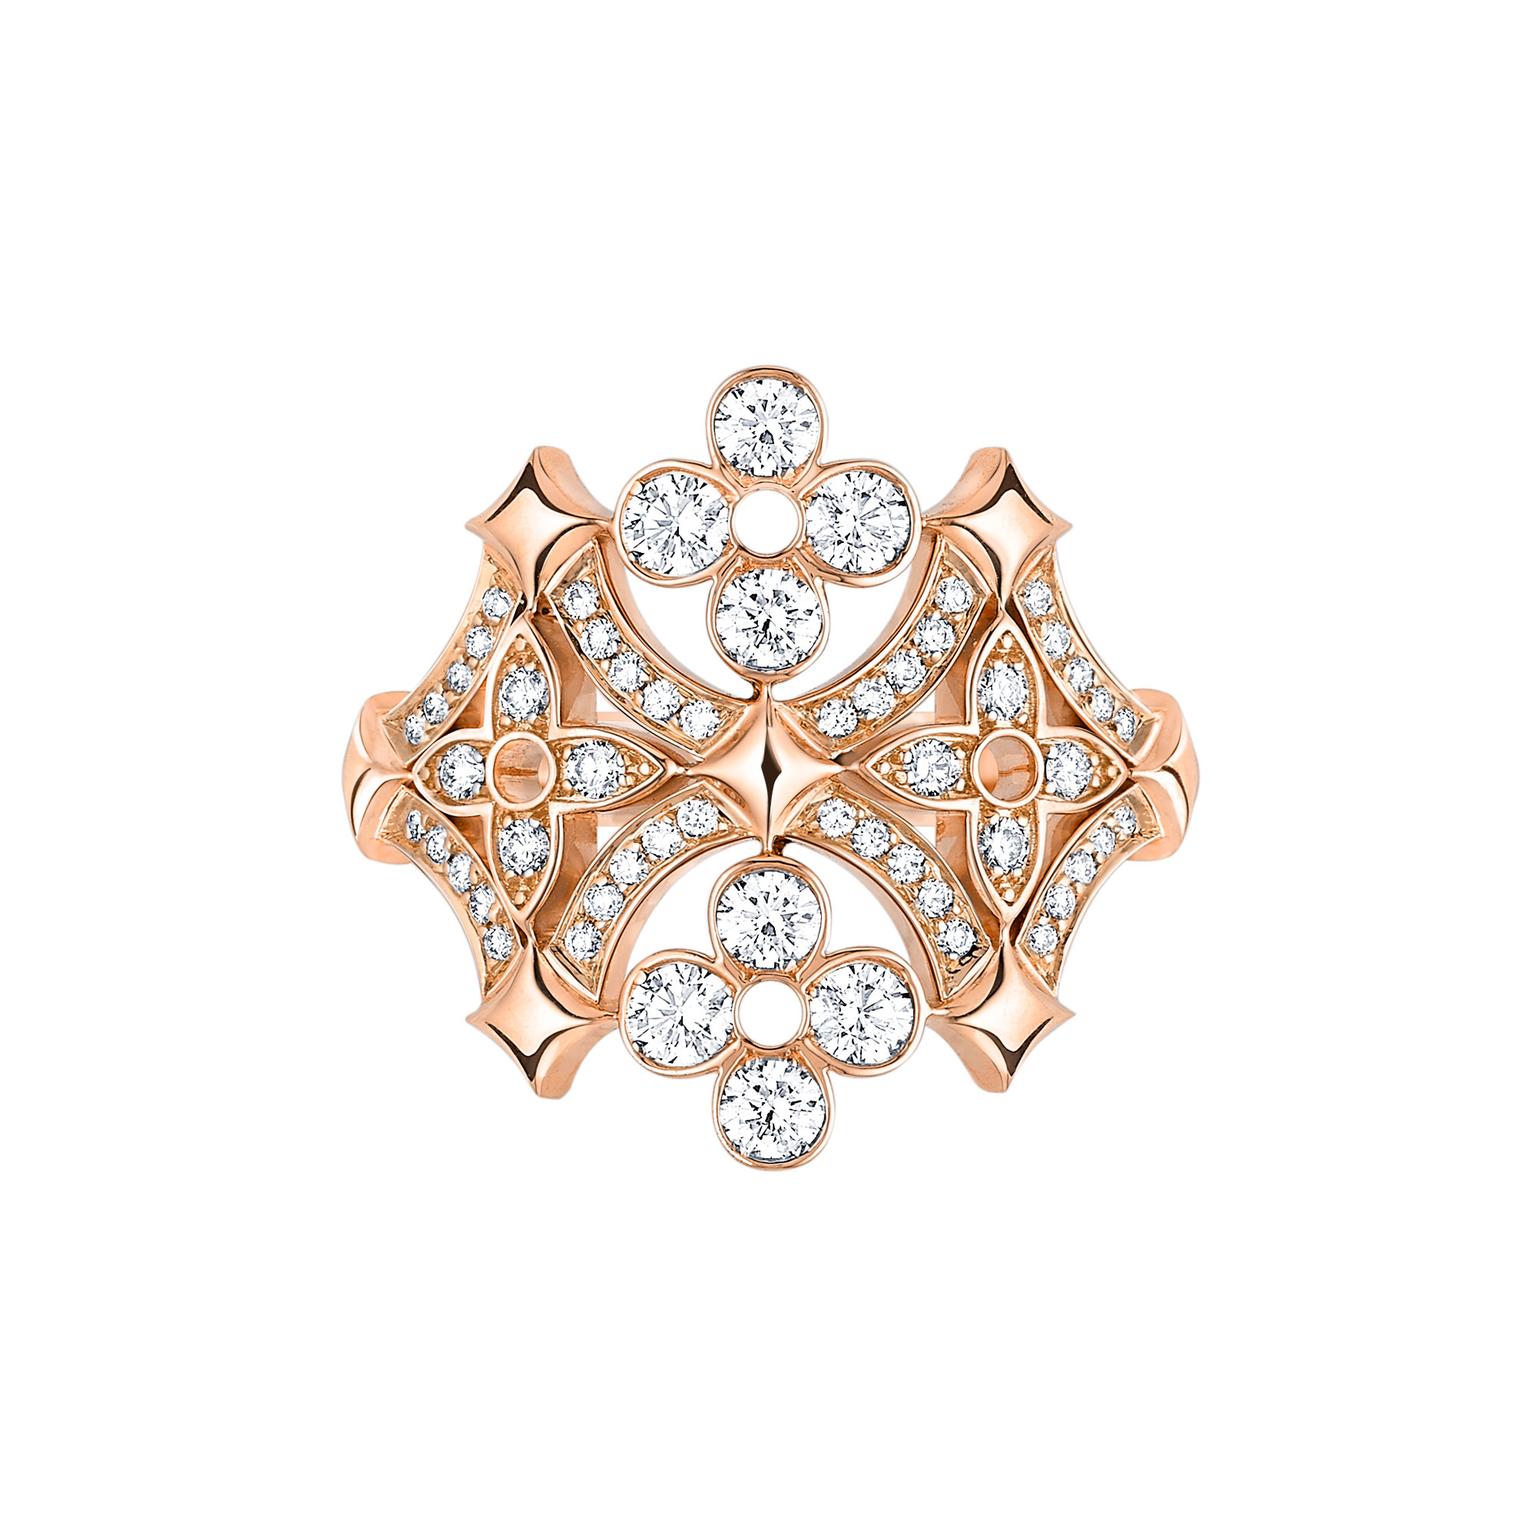 Louis Vuitton Dentelle de Monogram pink gold and diamond ring